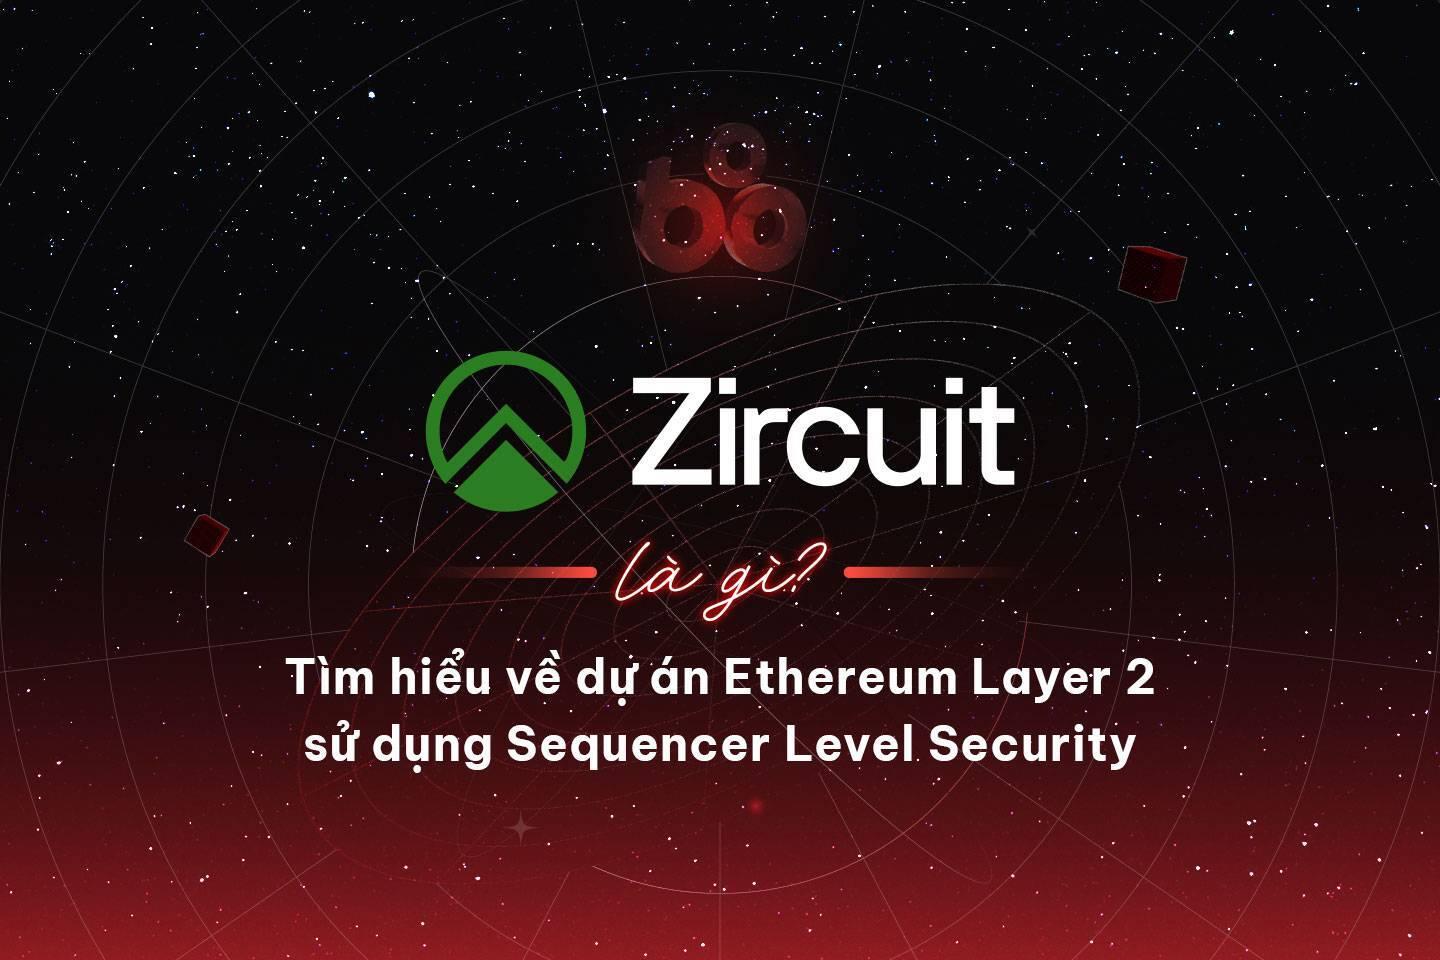 zircuit-la-gi-tim-hieu-ve-du-an-ethereum-layer-2-su-dung-sequencer-level-security